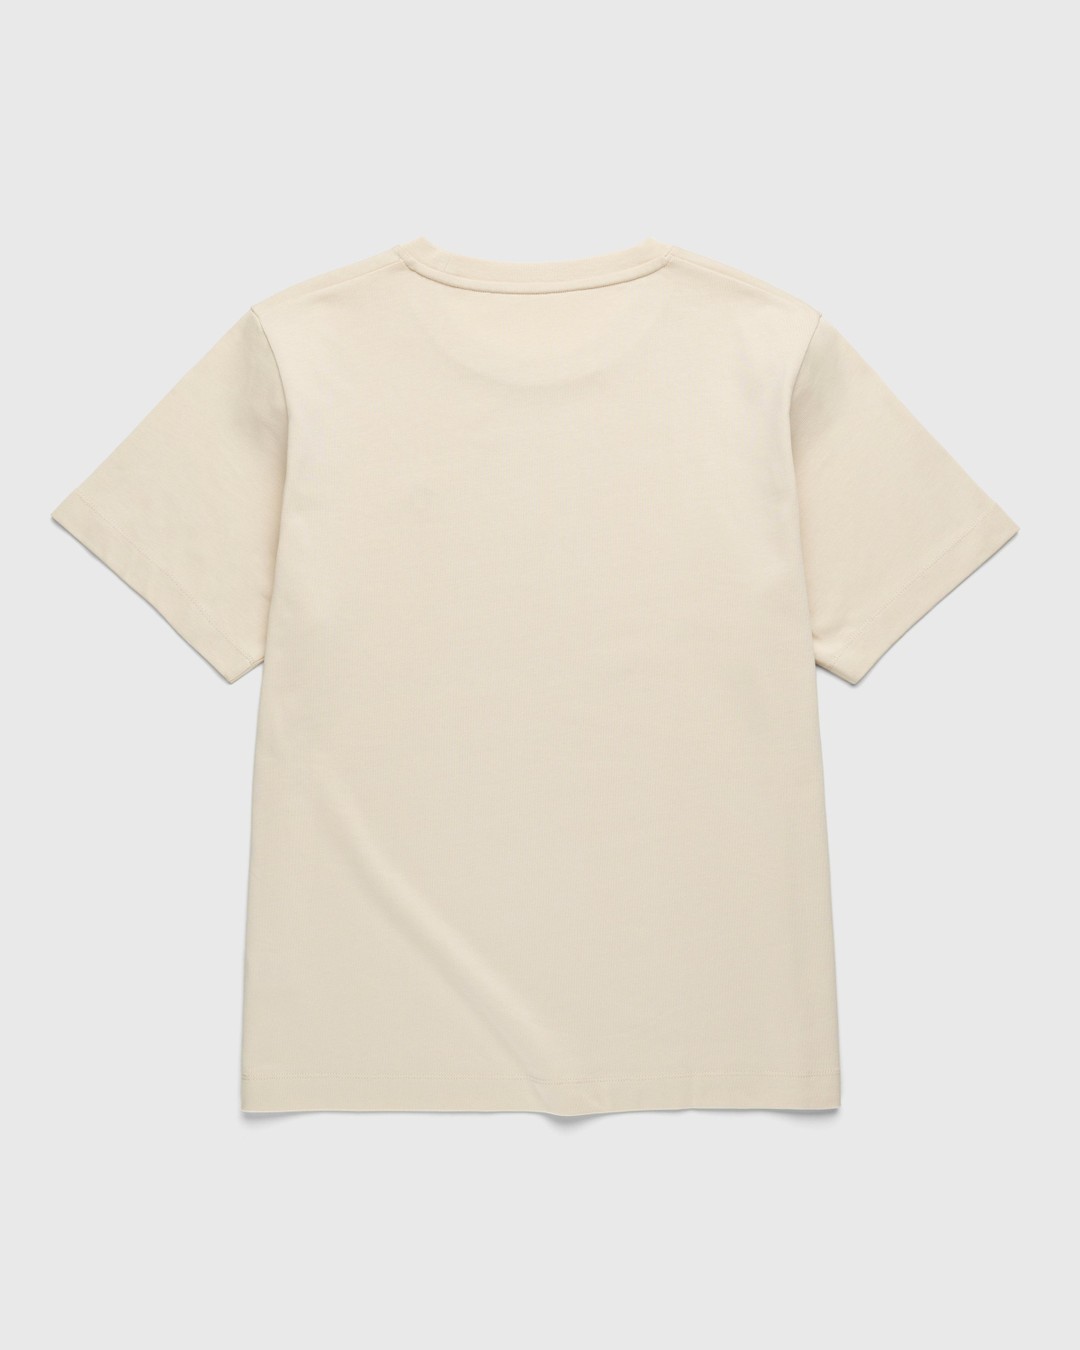 Marine Serre – Organic Cotton T-Shirt Beige - T-shirts - Beige - Image 2